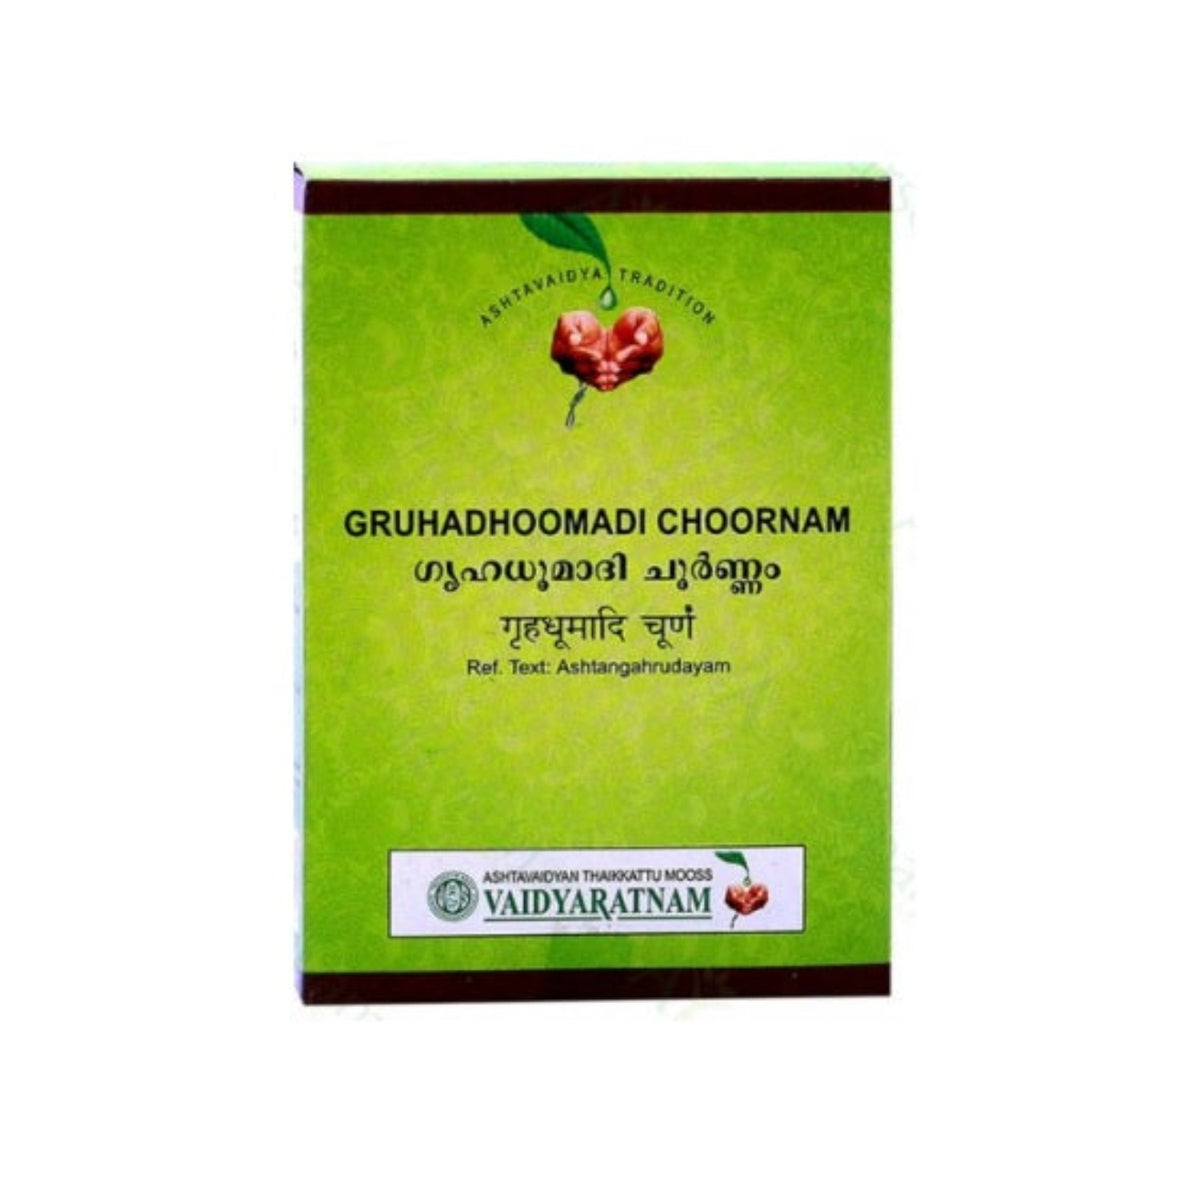 Vaidyaratnam Ayurvedic Grihadhoomadi Choornam Powder 100g